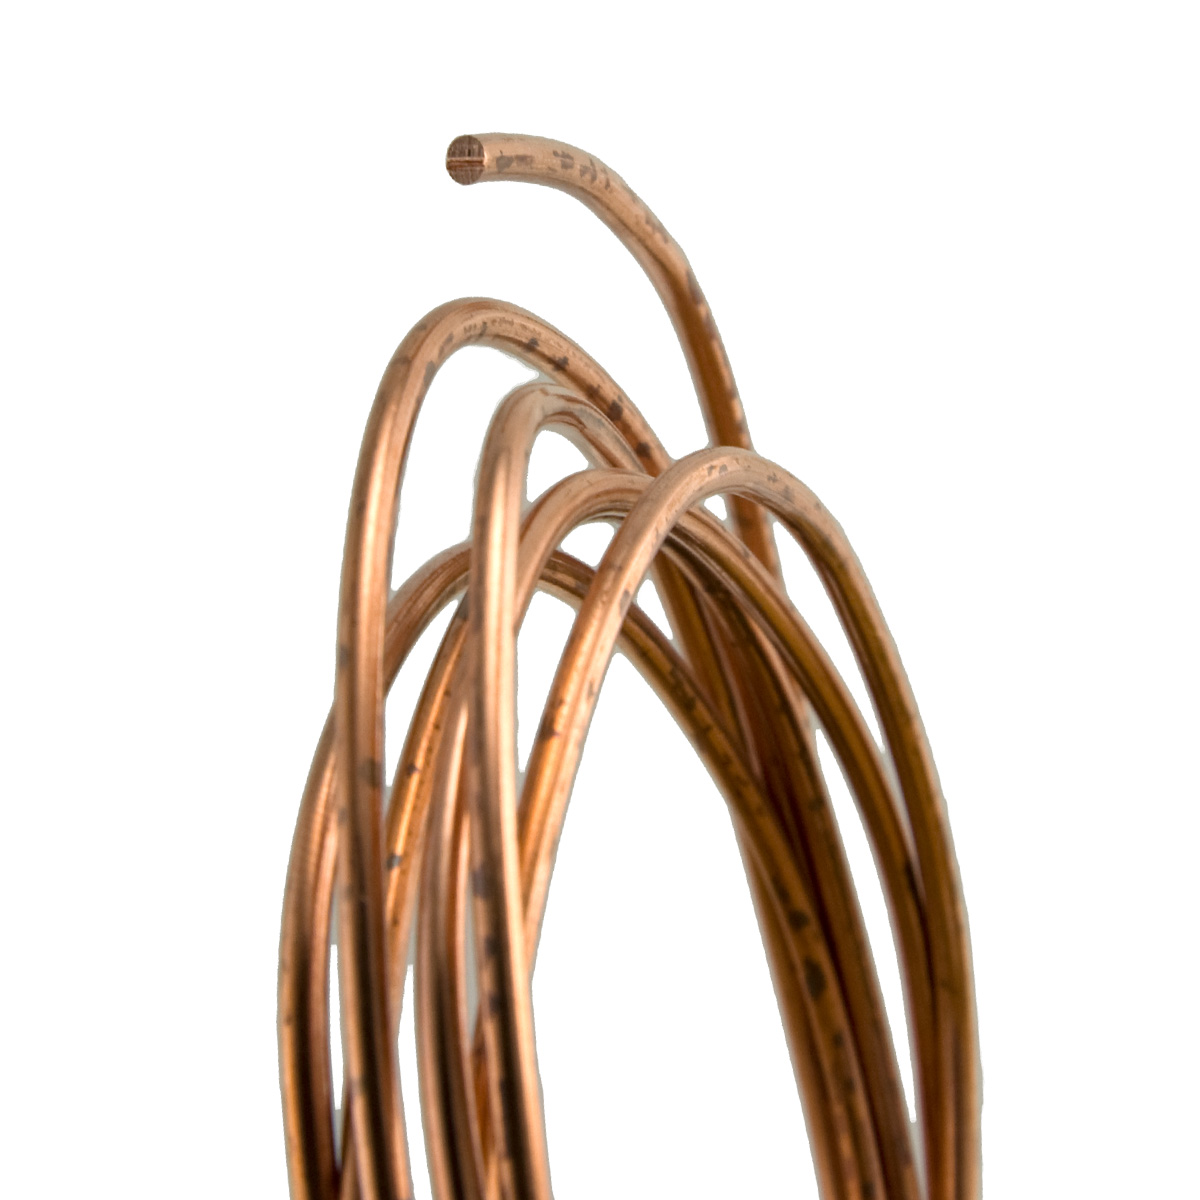 99.9% Pure Copper Wire Round Dead Soft 12 Gauge CDA #110-25FT from Craft Wire 